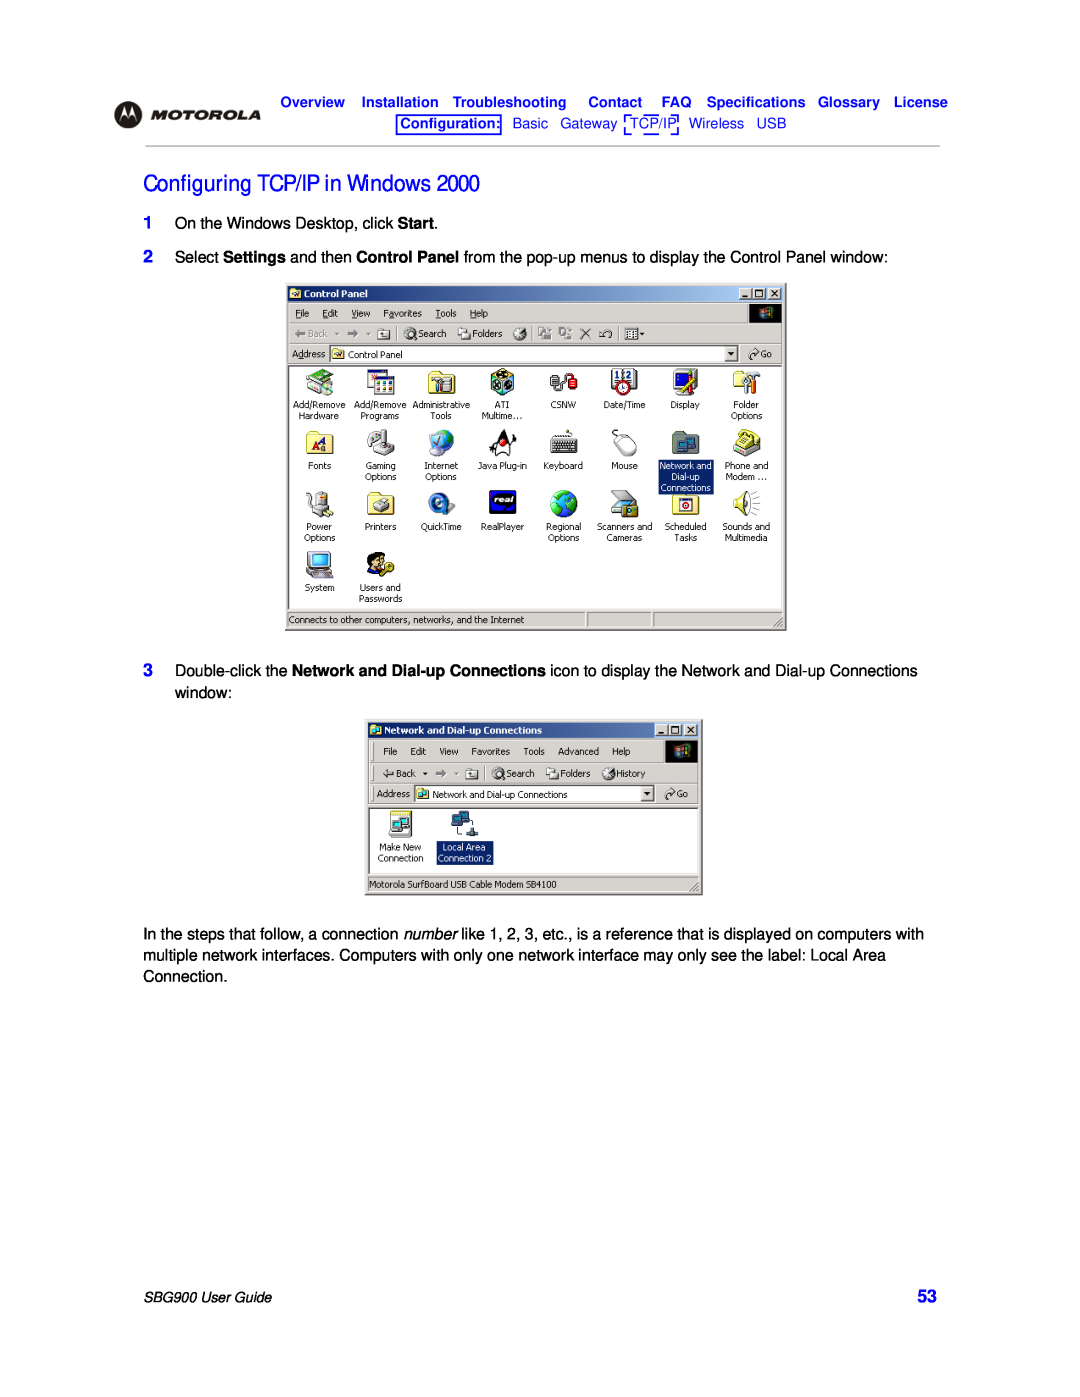 Motorola SBG900 manual Configuring TCP/IP in Windows 